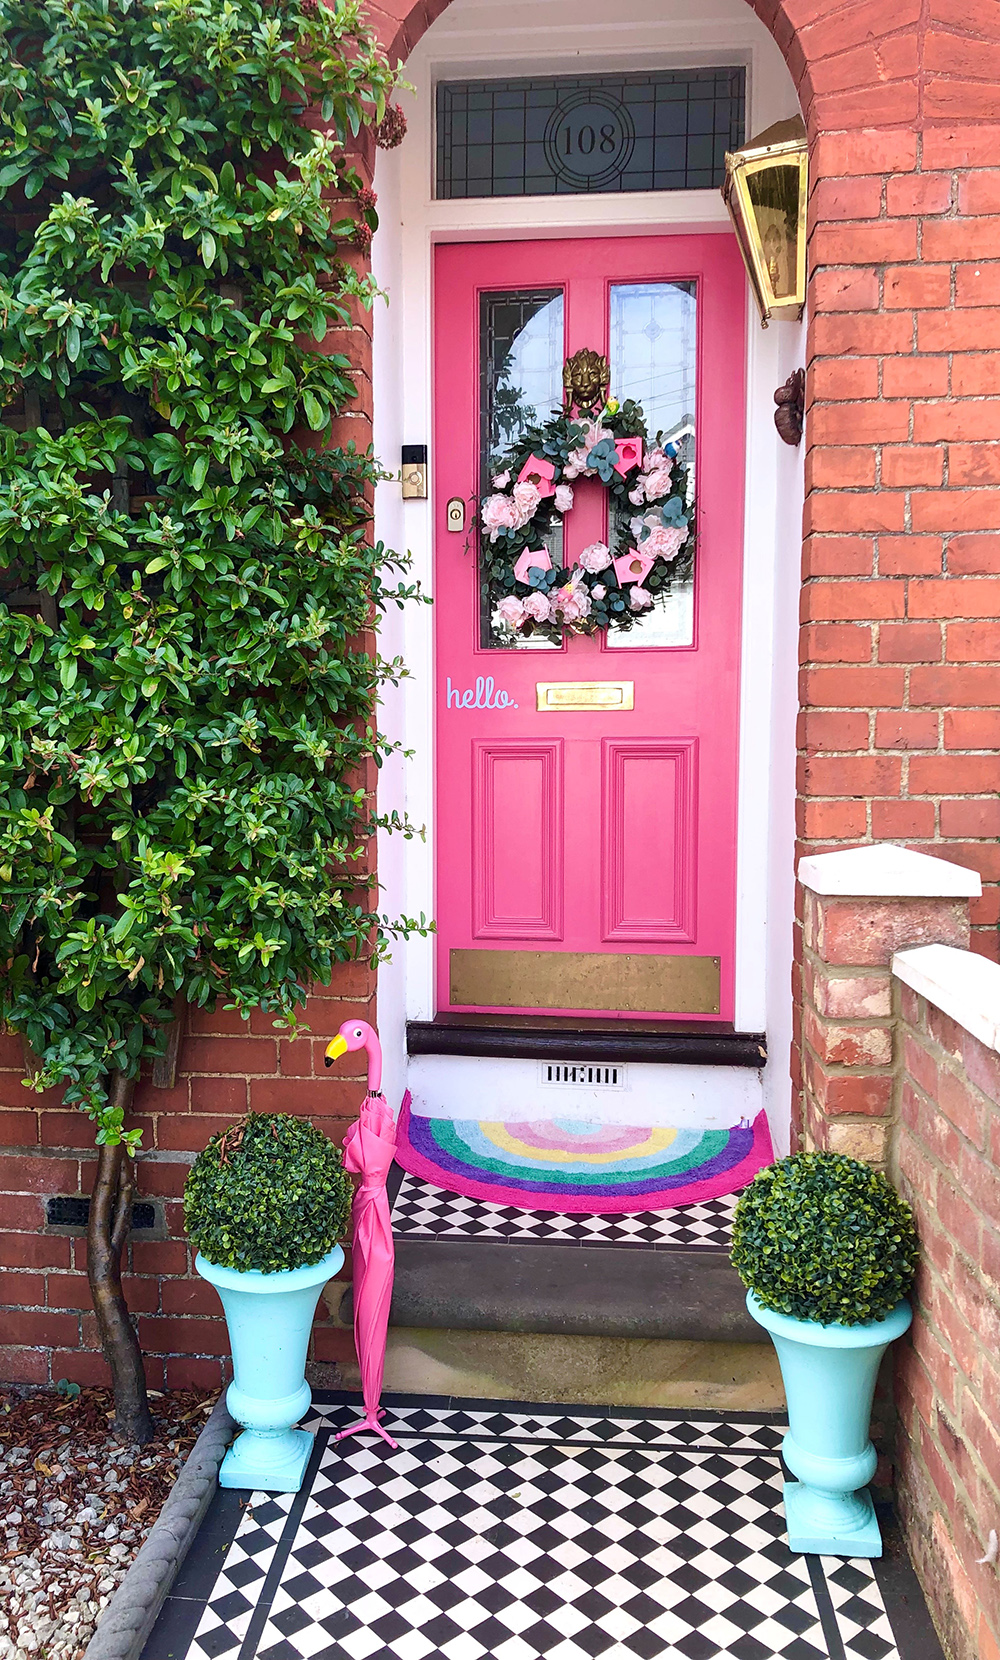 Fun family home decor - hot pink front door with monochrome floor tiles